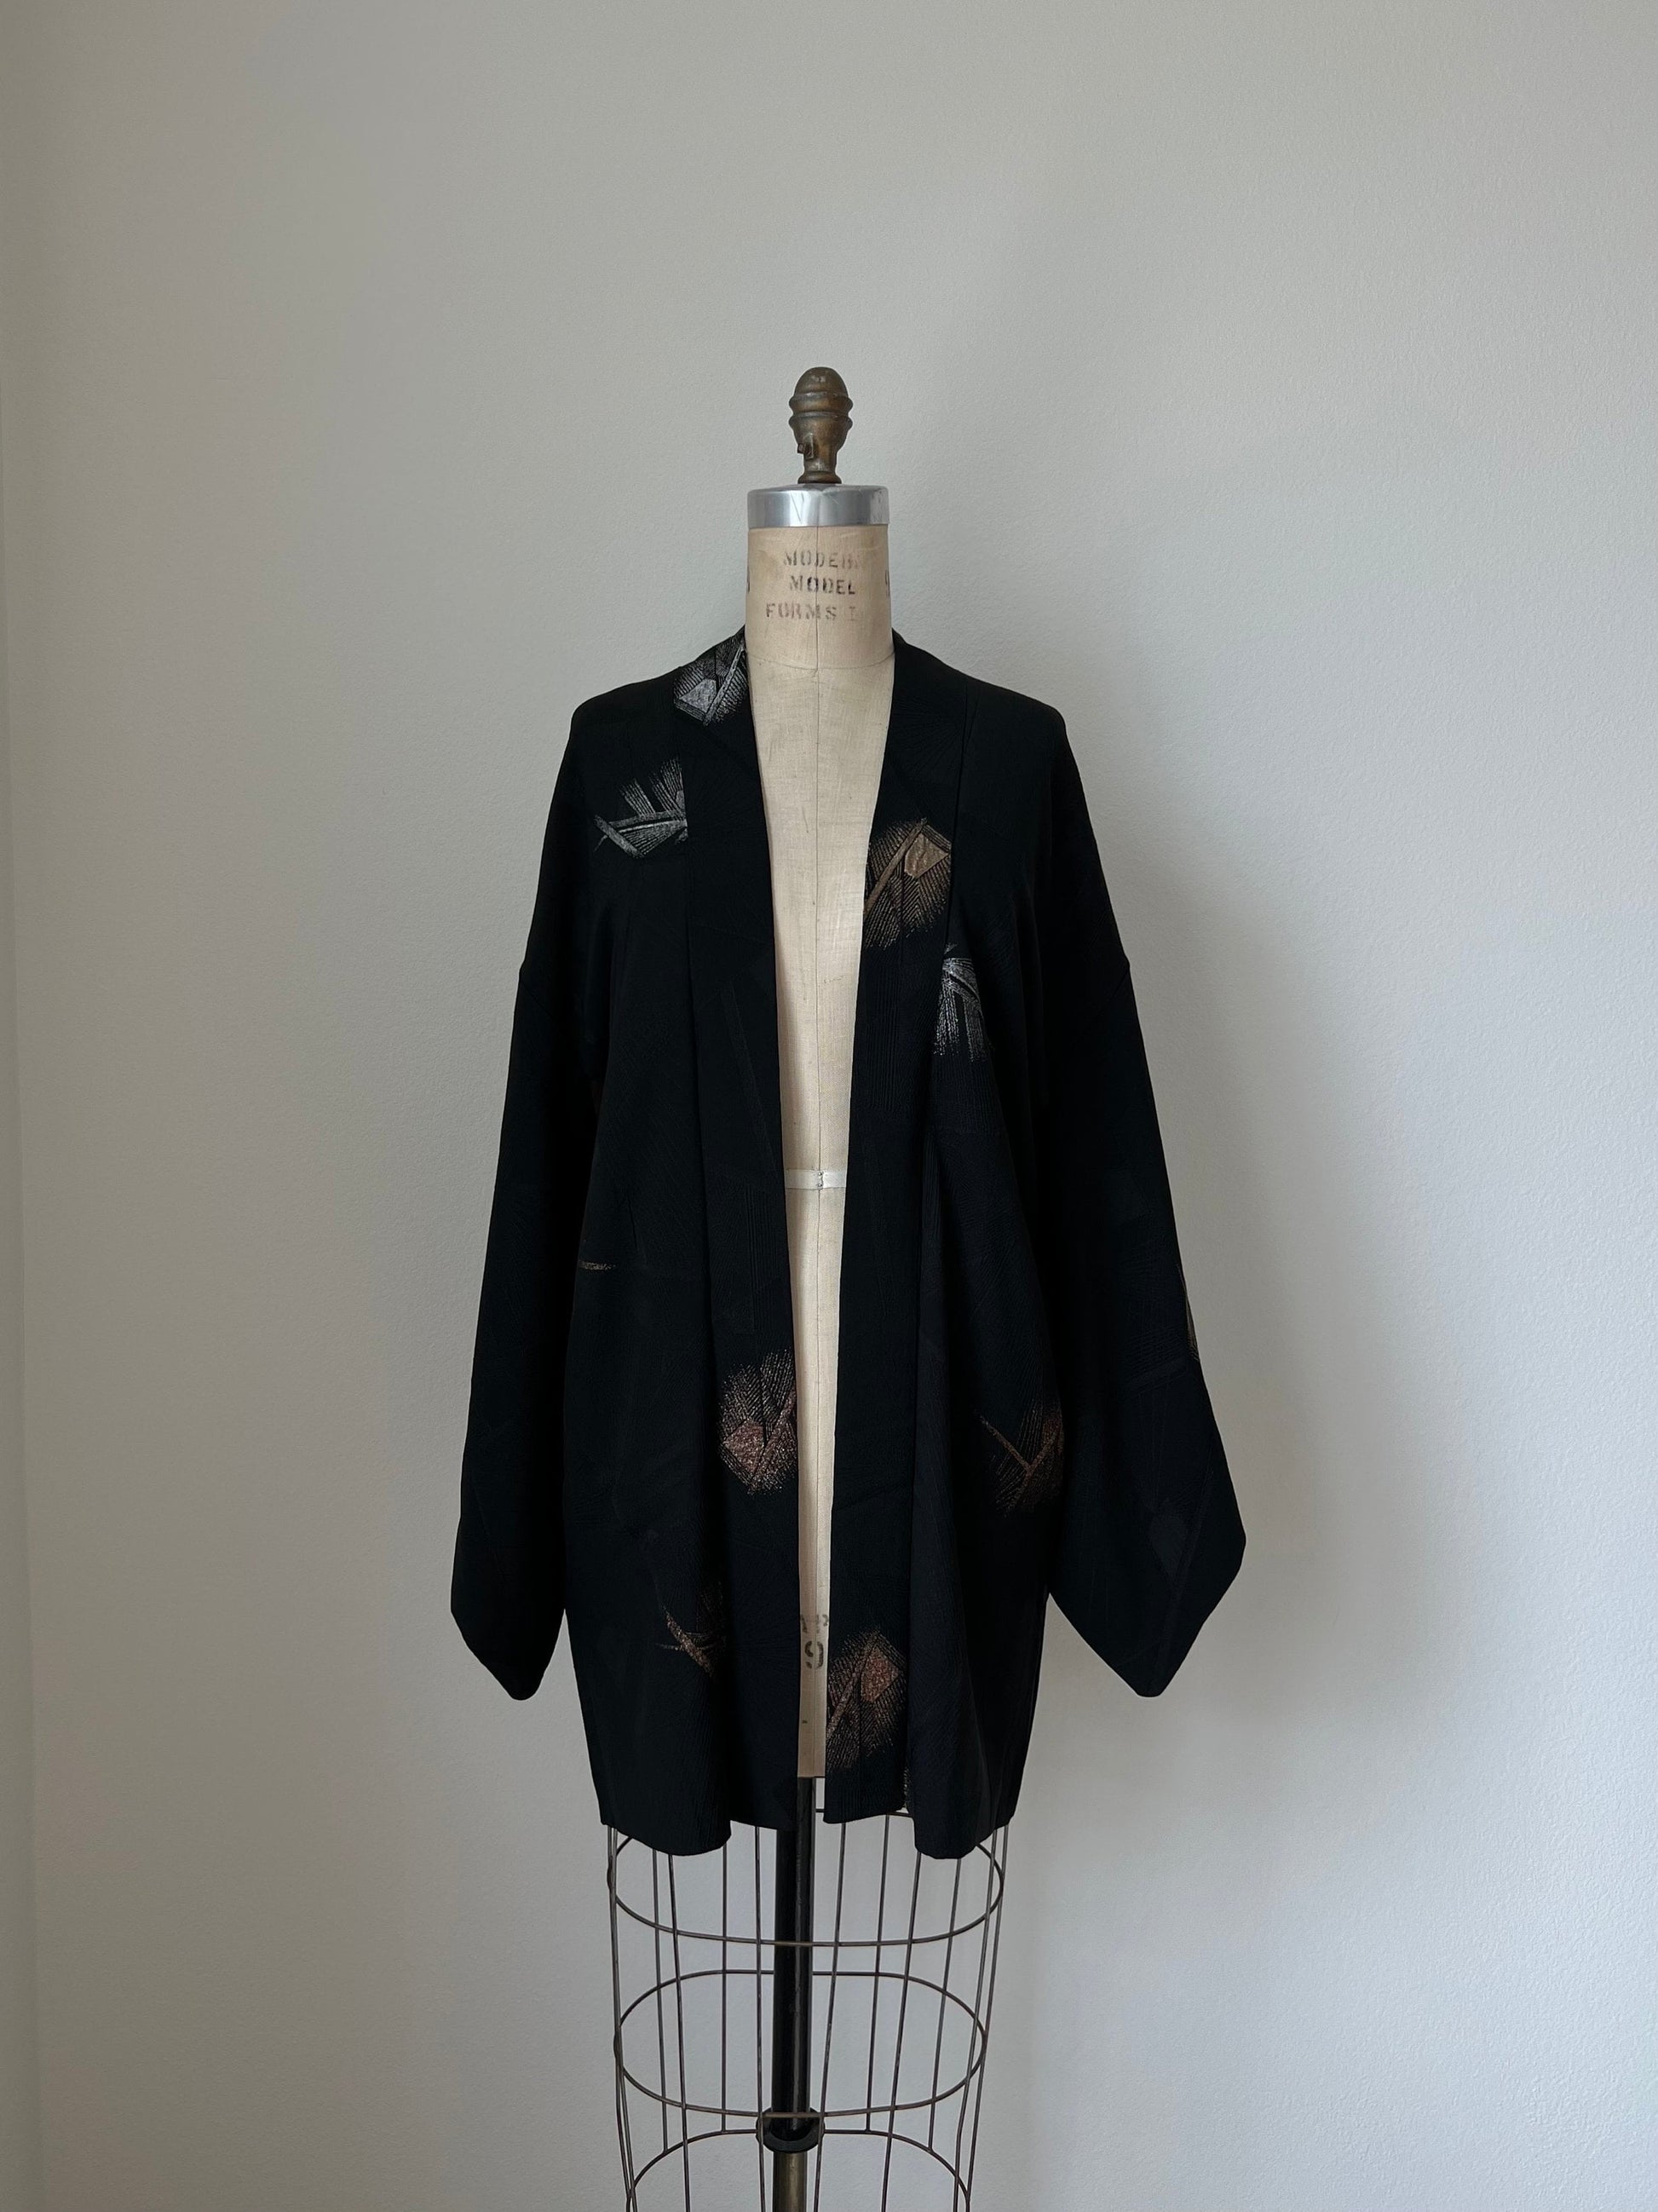 Front image, antique Japanese black haori kimono jacket